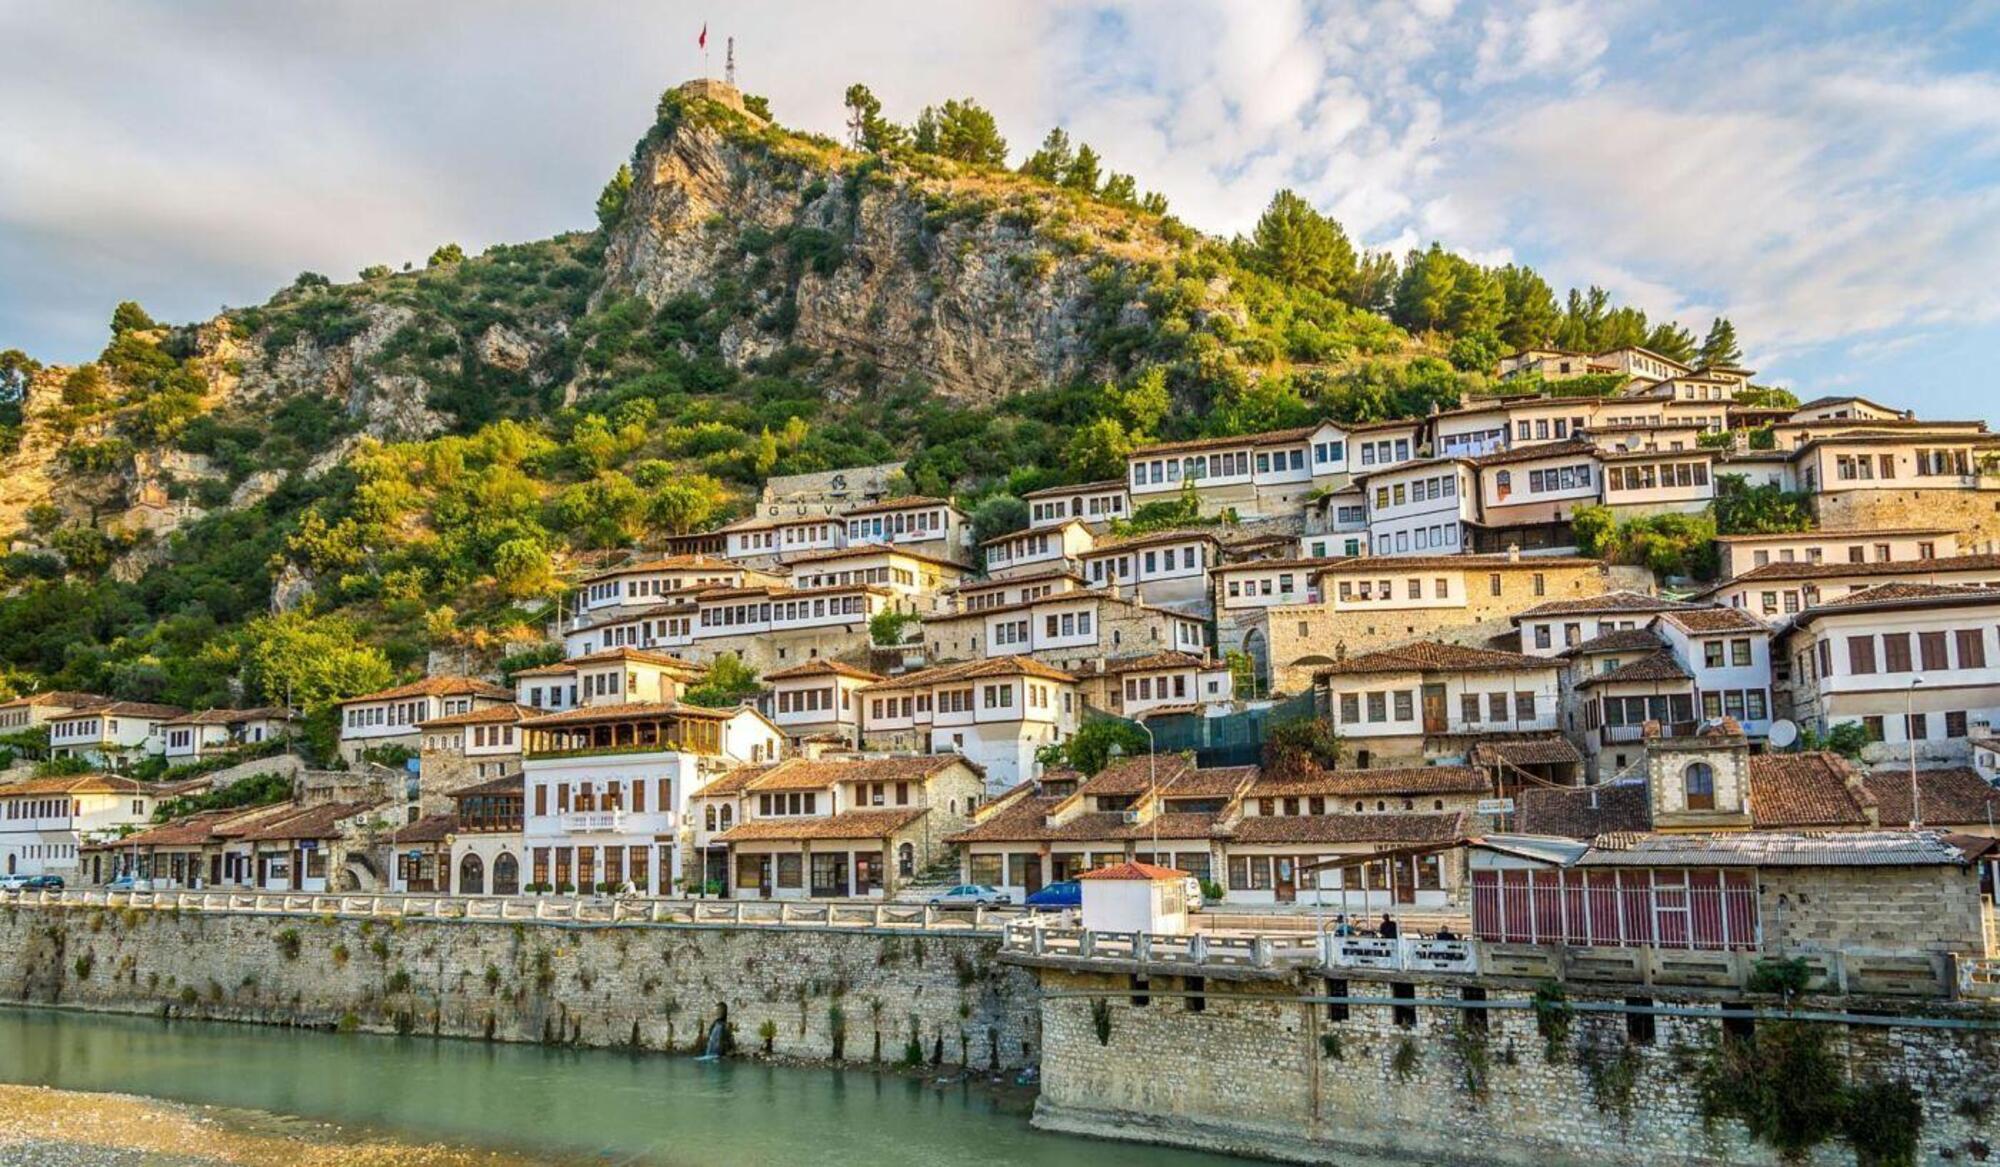 Berat in Albania